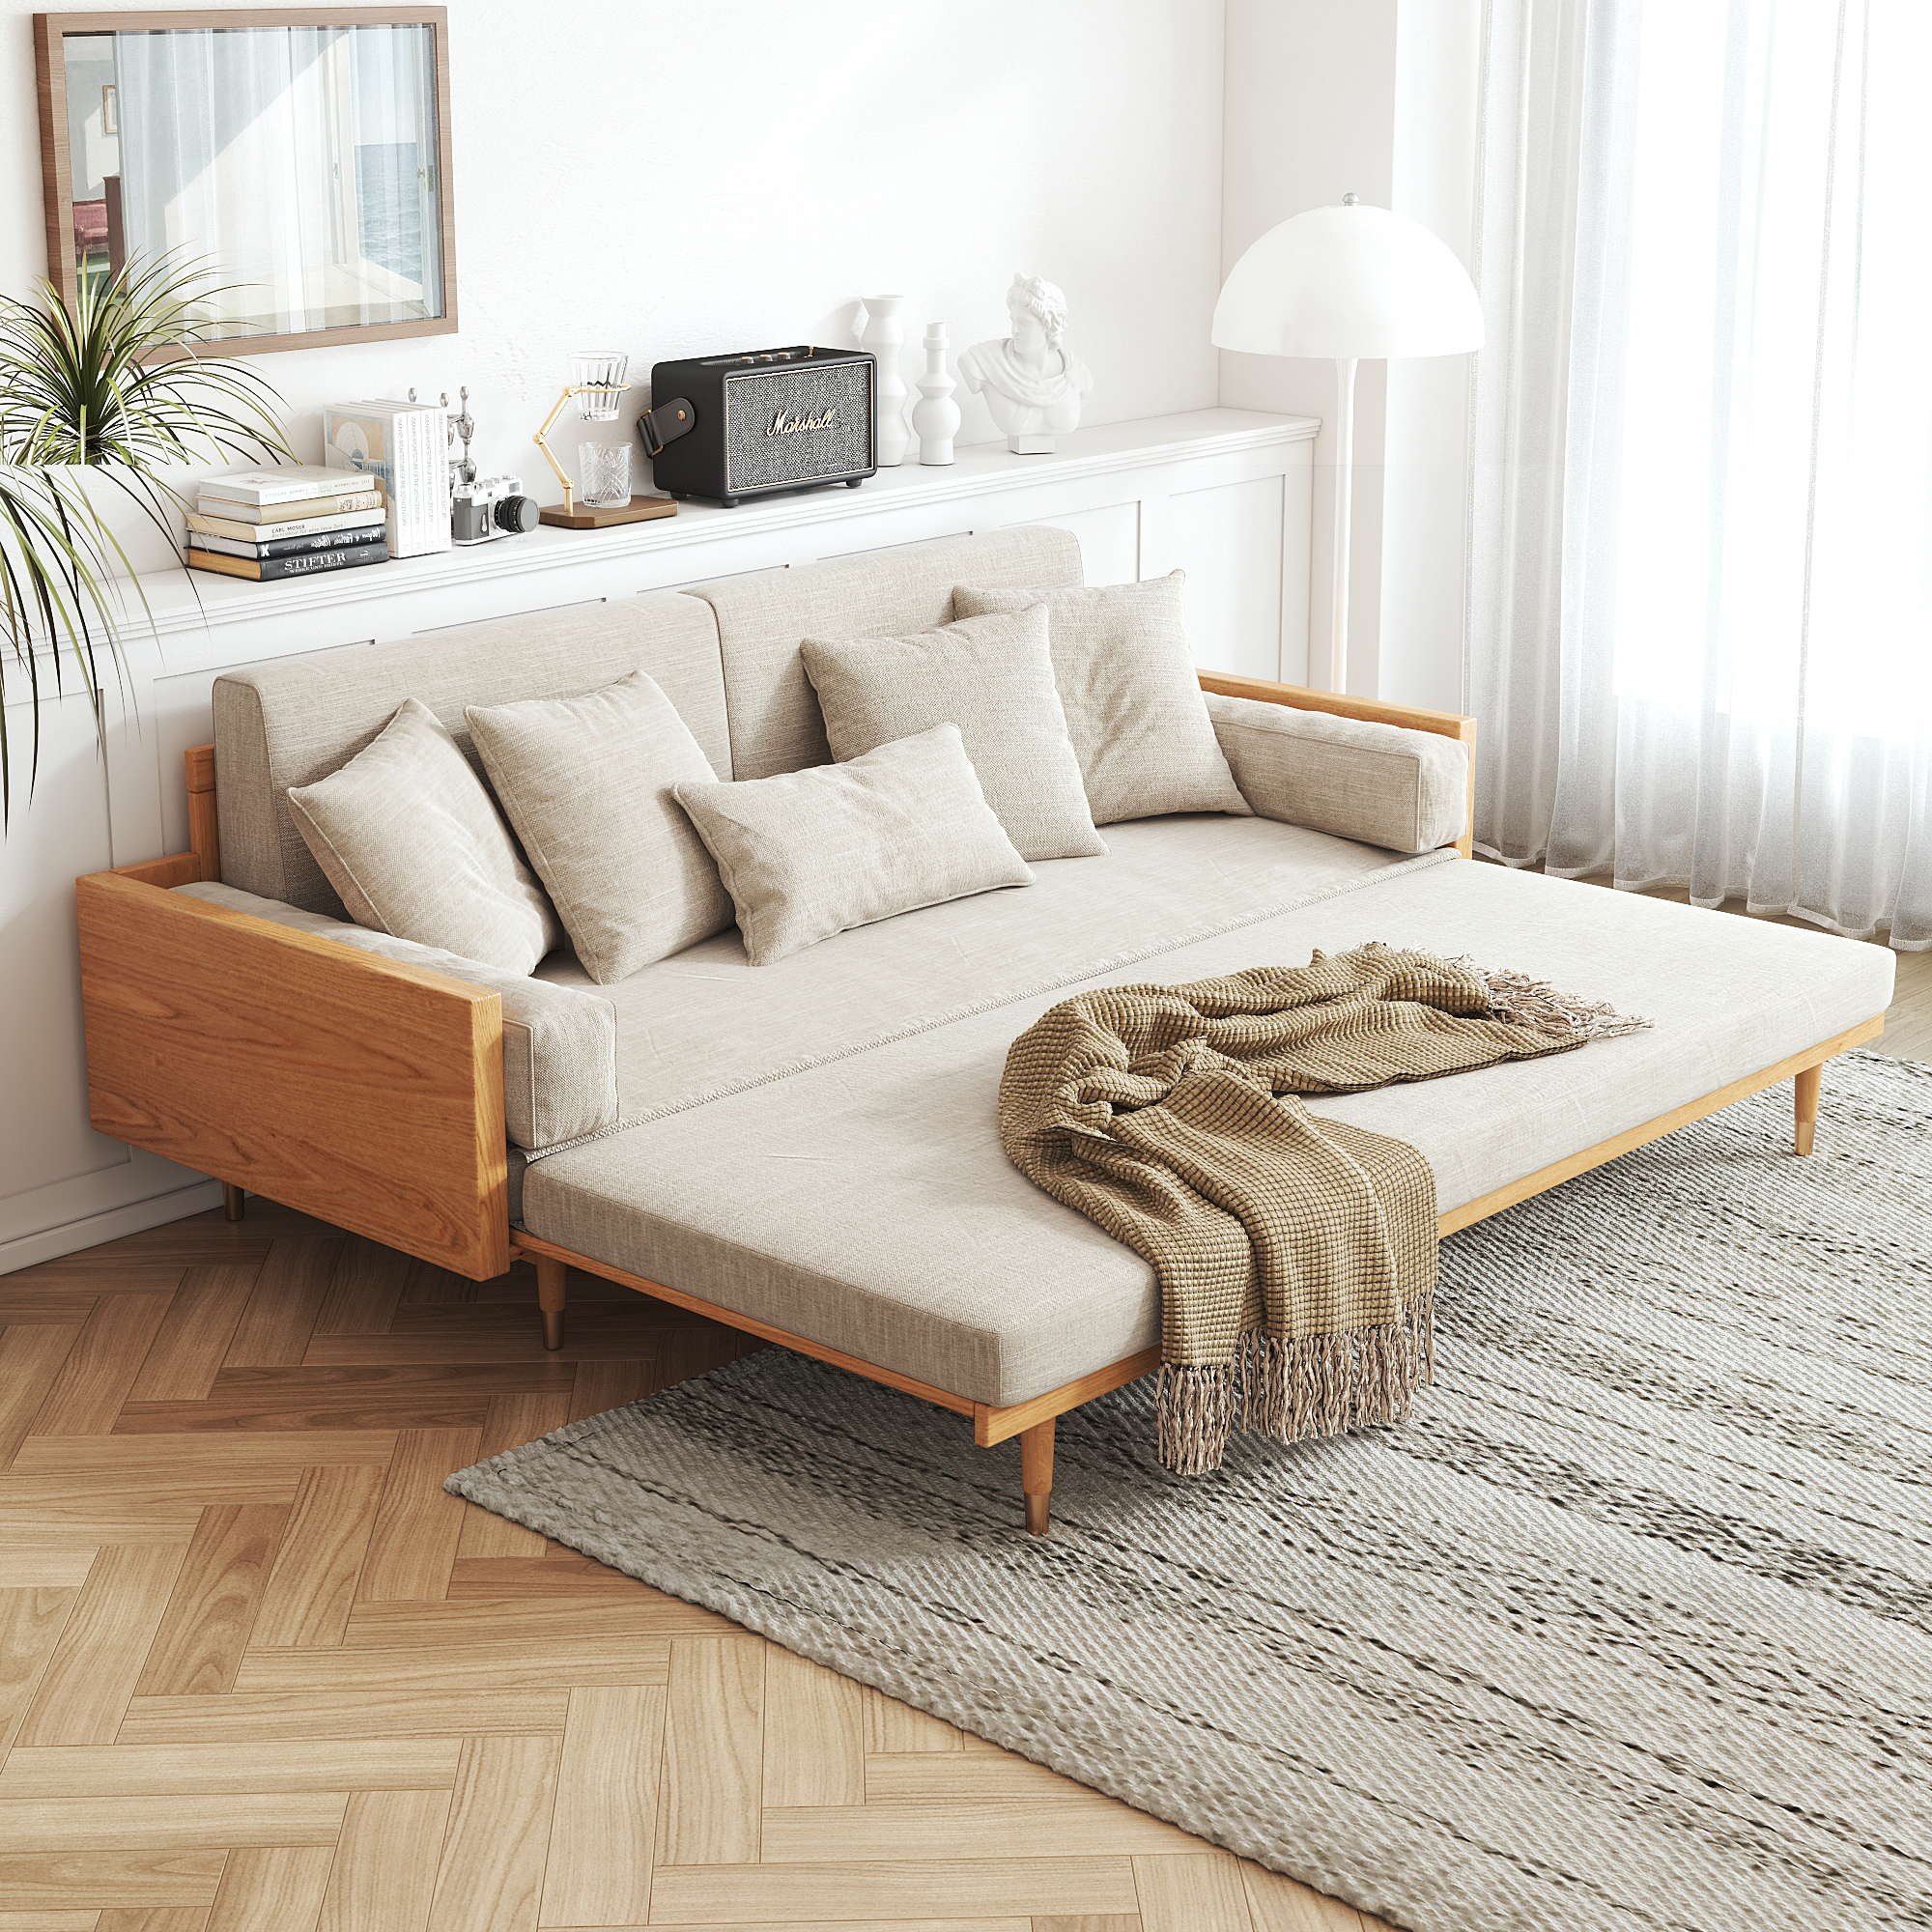 HUANASI 华纳斯 日式实木折叠沙发床两用北欧简约小户型双人伸缩抽拉多功能沙发